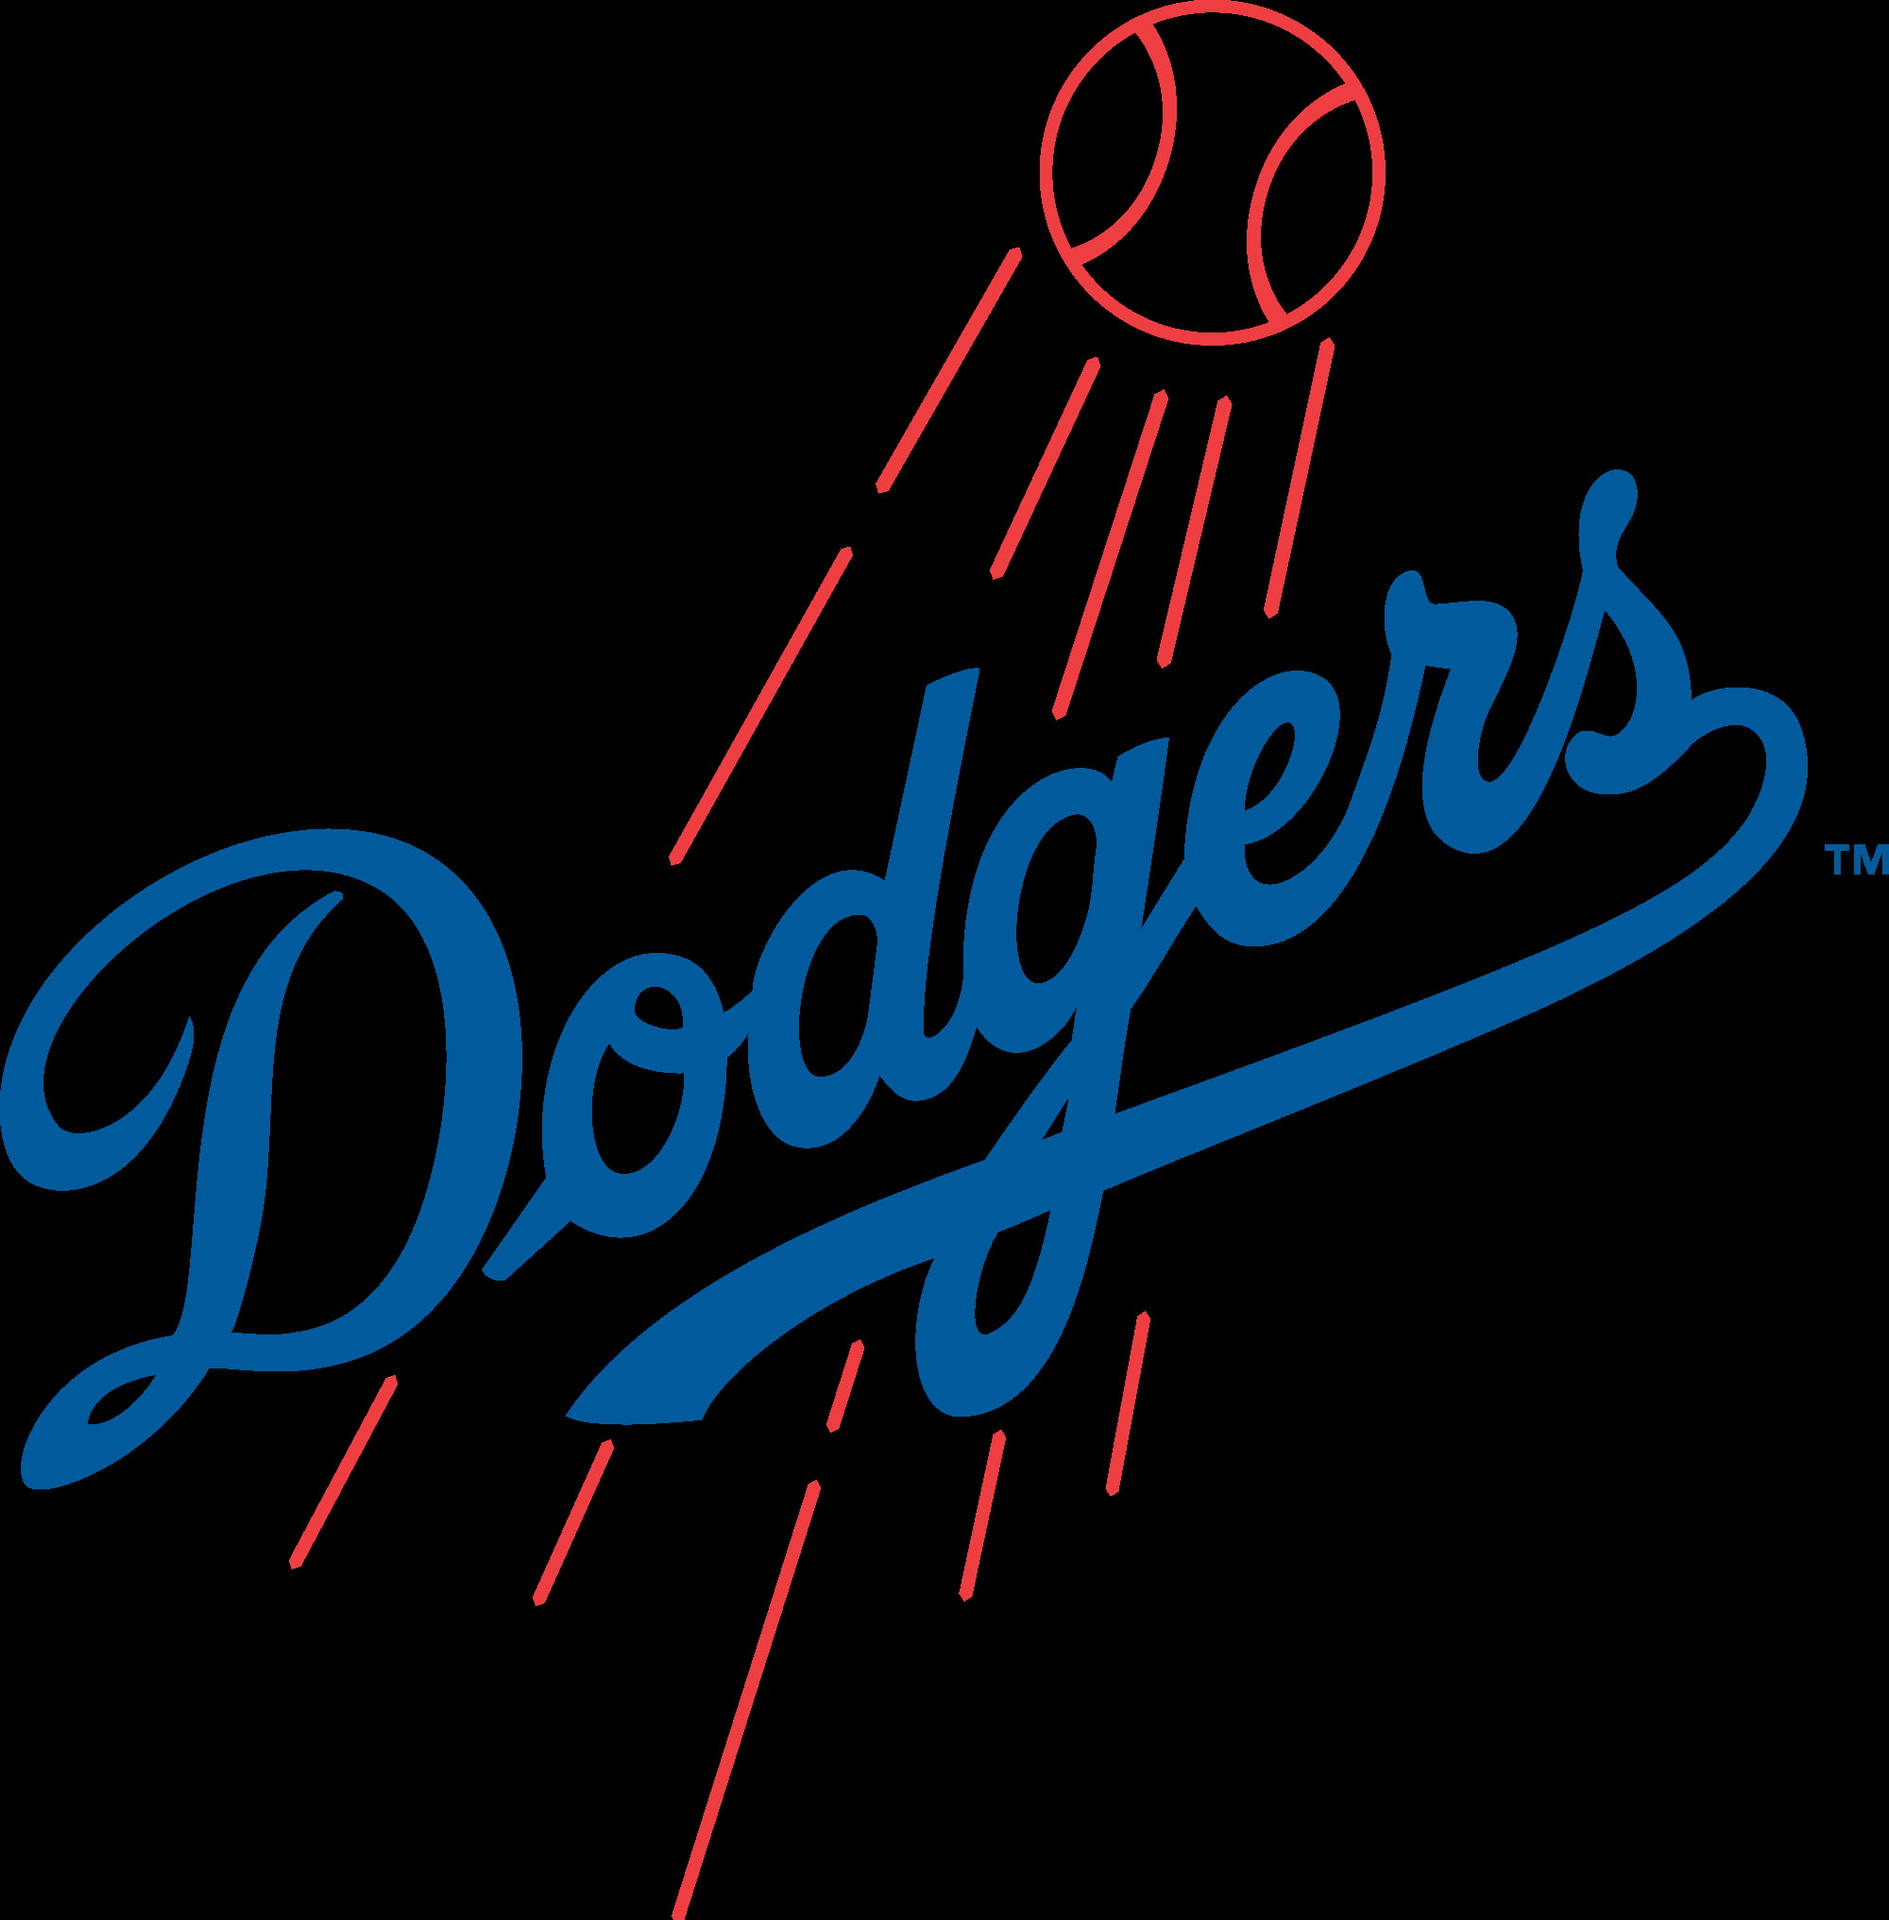 Los Angeles Dodgers Luminous Red Ball Wallpaper